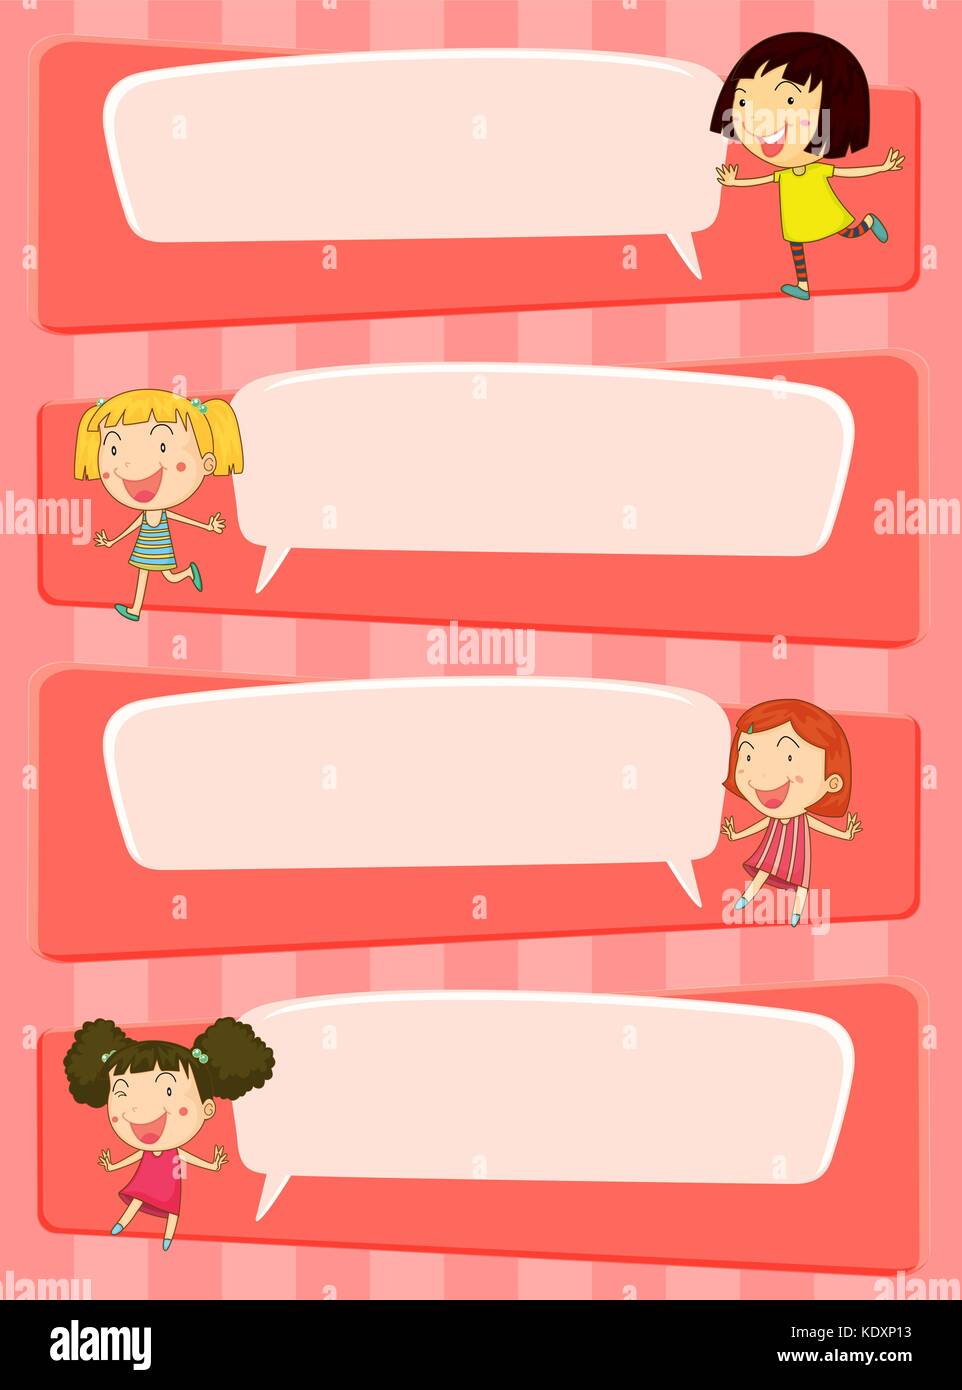 Bubble speech designs with children illustration Stock Vector Image